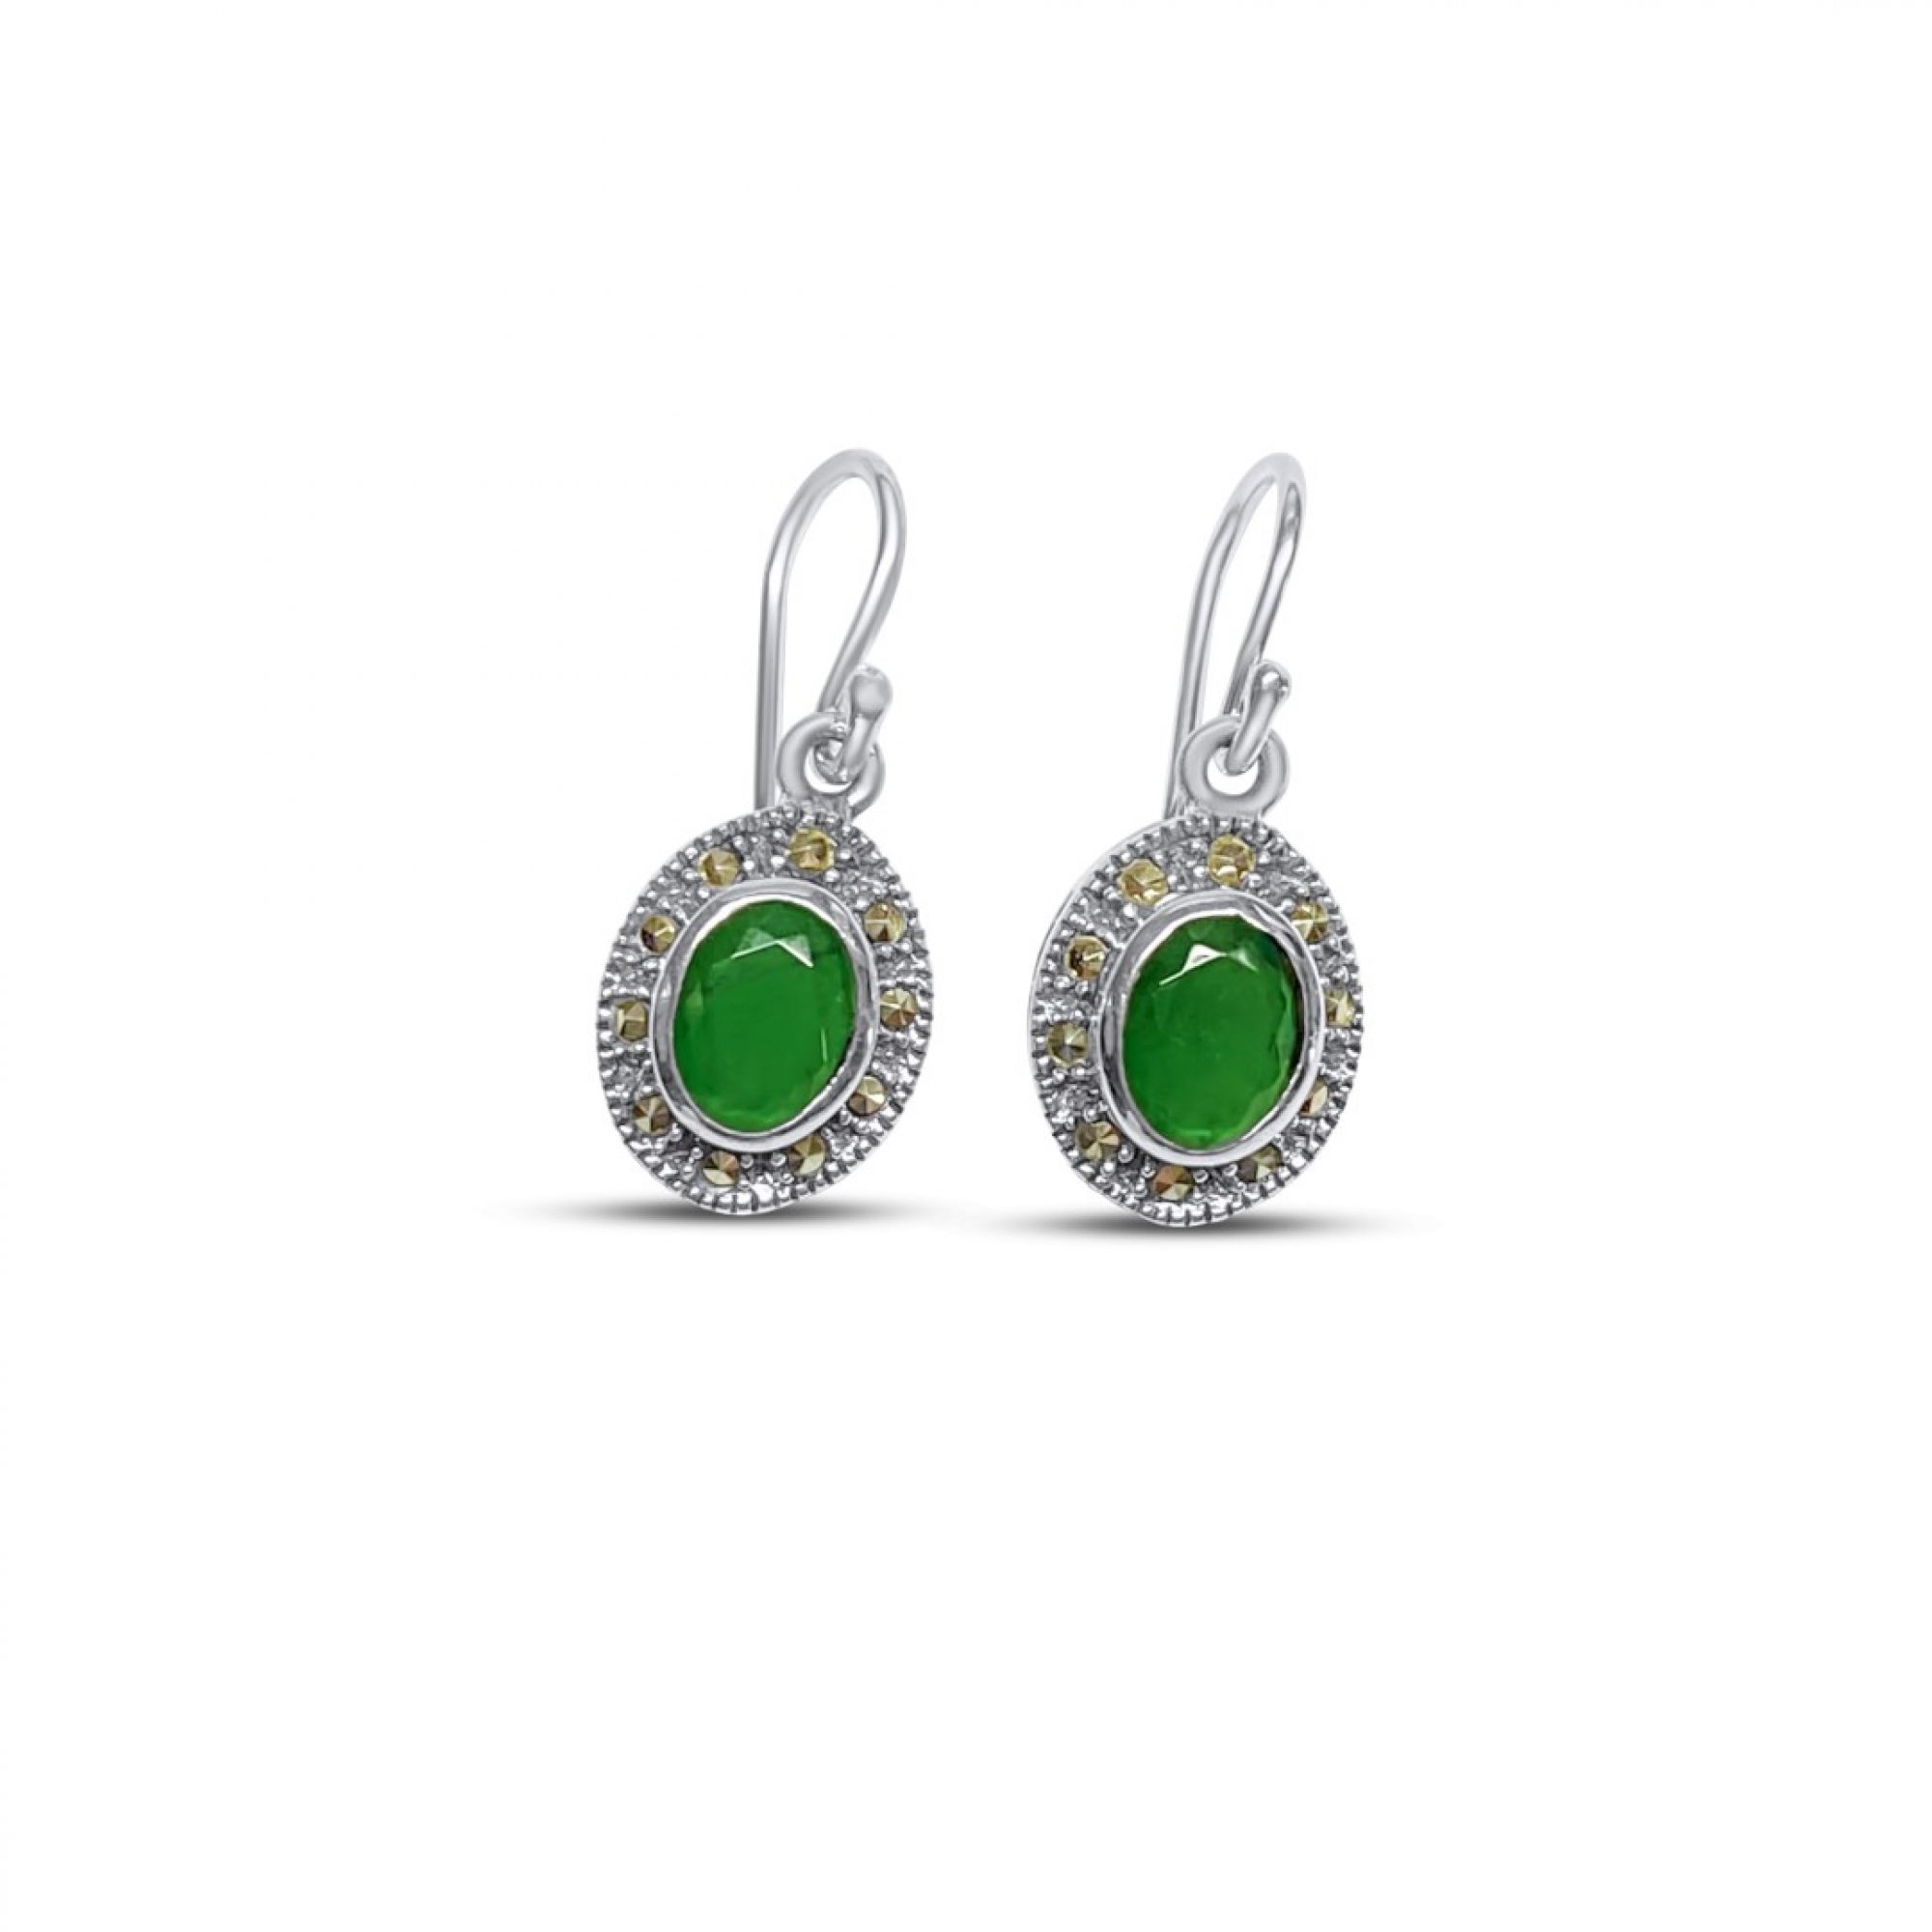 Dangle marcasite earrings with emerald stones